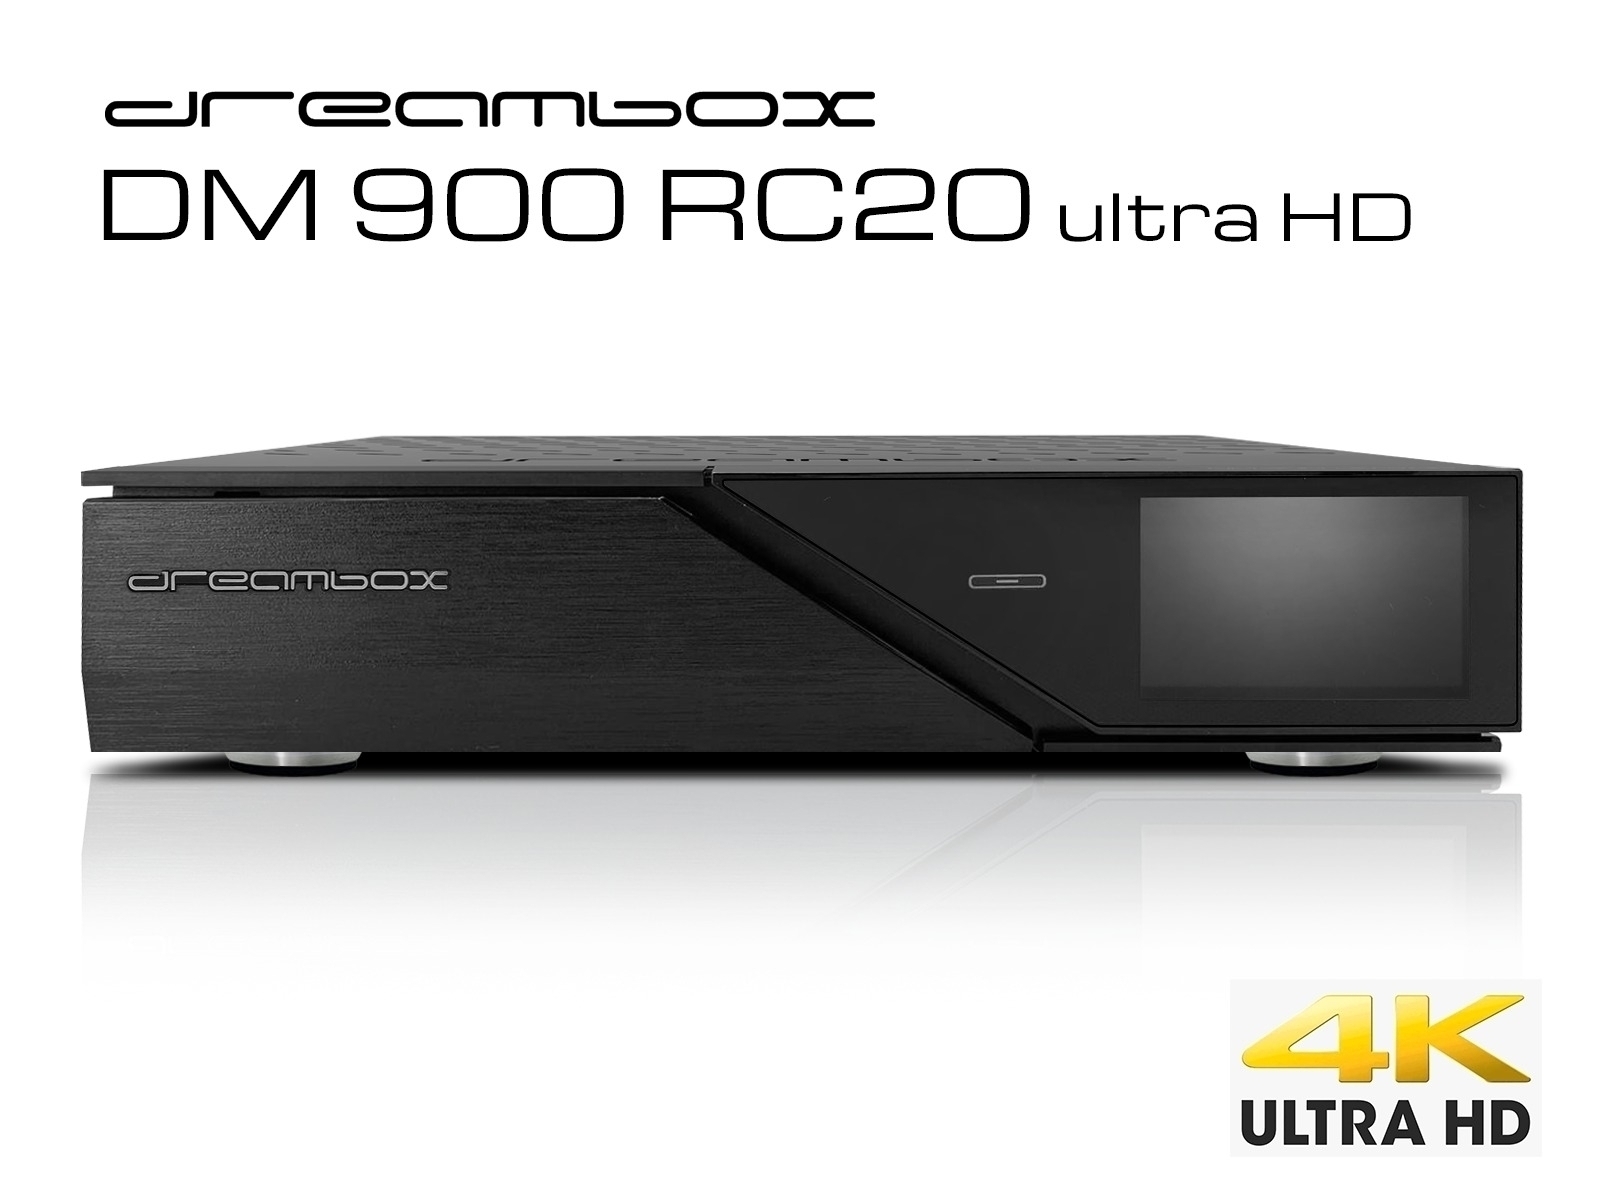 DreamBox DM900 RC20 1xDVB-S2 Dual UltraHD 4k Linux E2 PVR Receiver